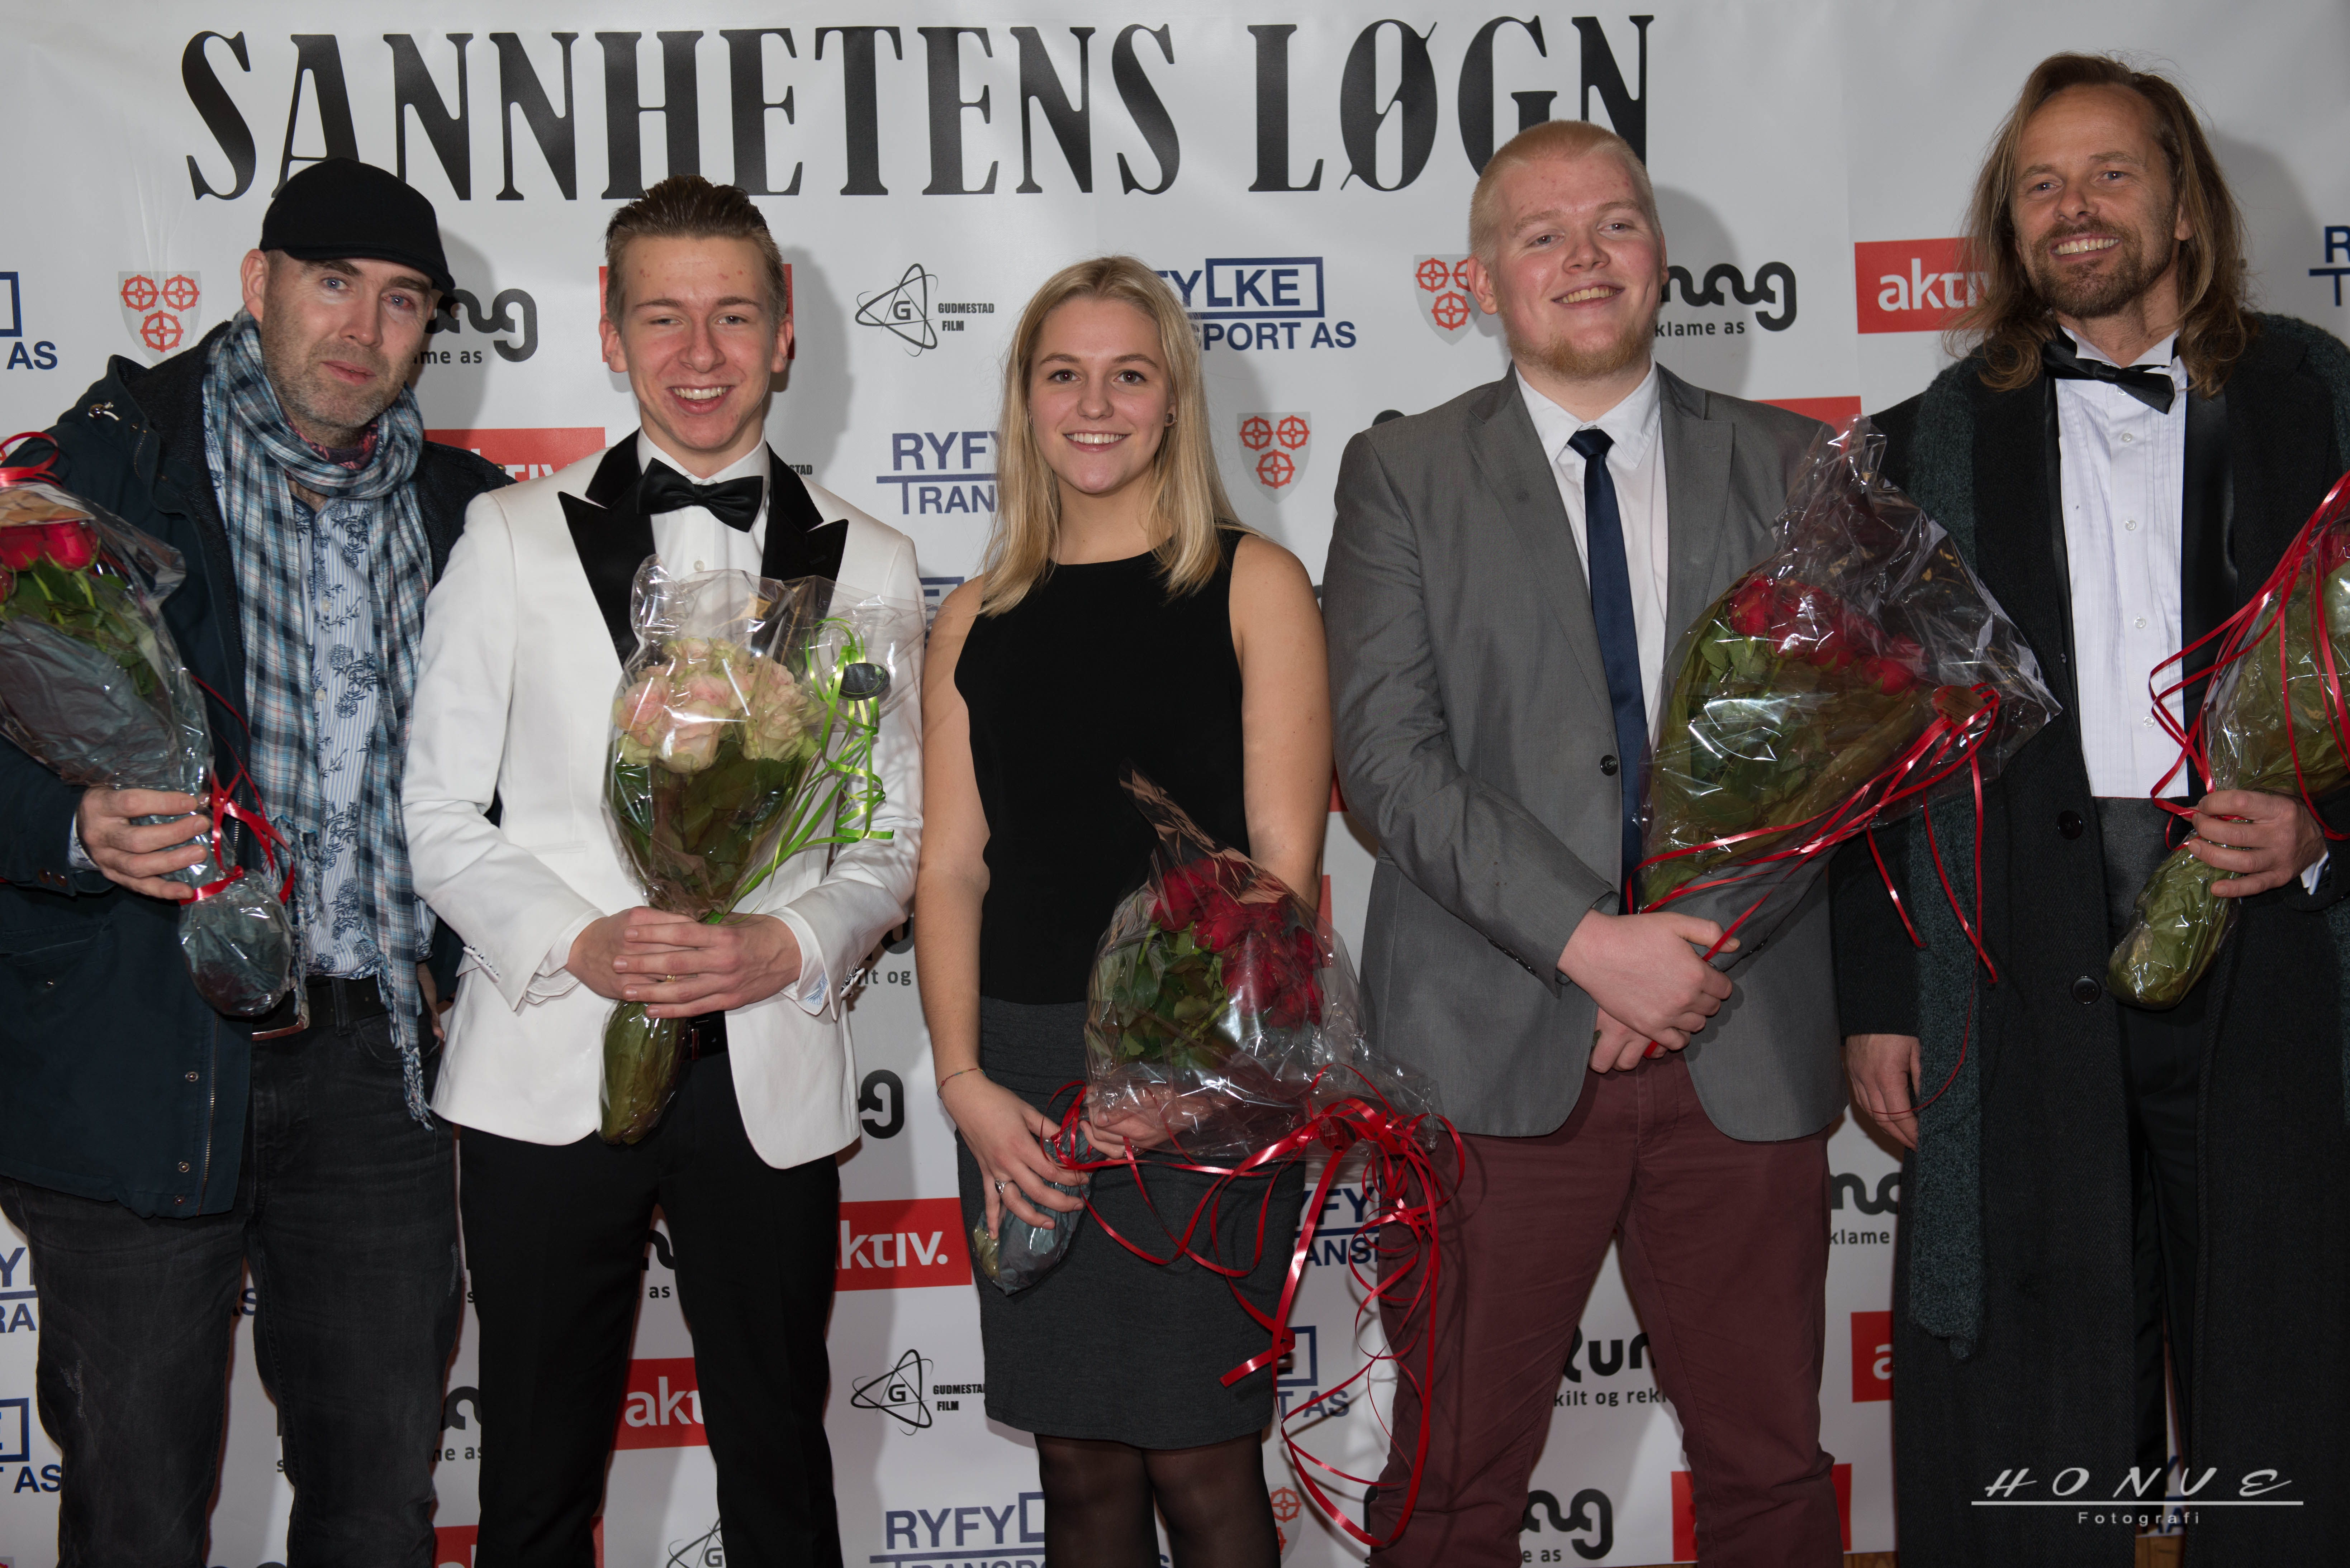 Tor Einar Gudmestad, Daniel Bratteli, Pernille Paulsen, Torbjørn Vidnes and Sture Mønnich at the event of Sannhetens Løgn (2015)